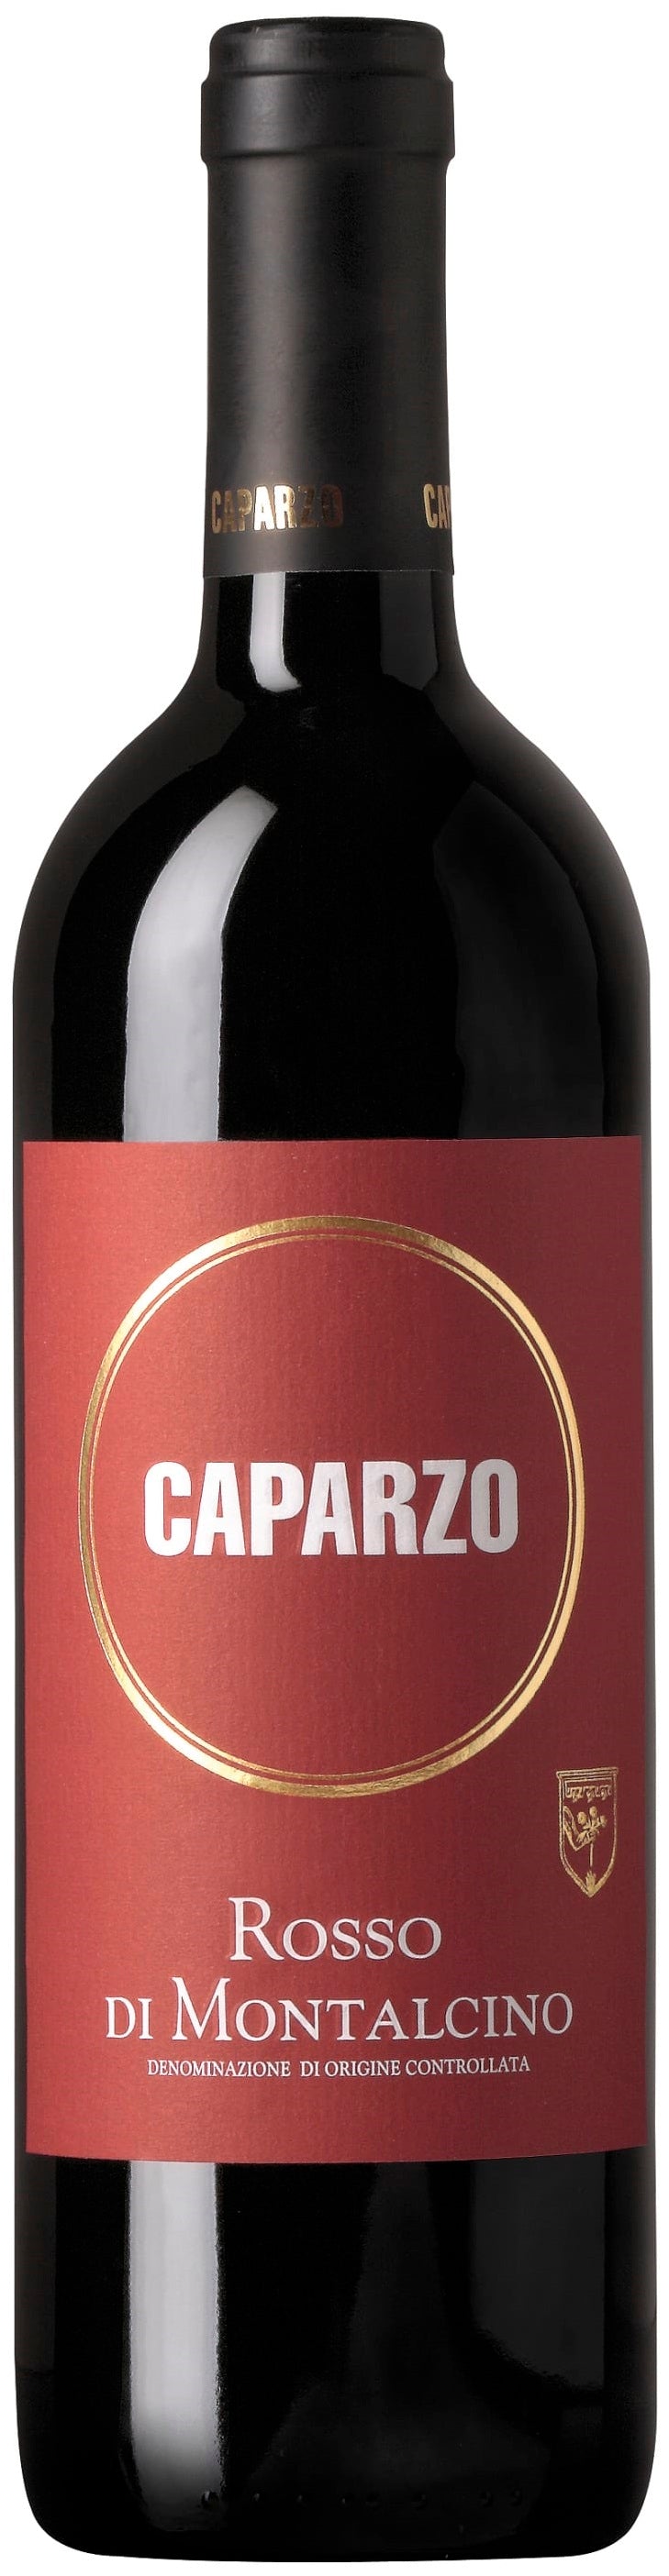 Caparzo Rosso Toscana 2019